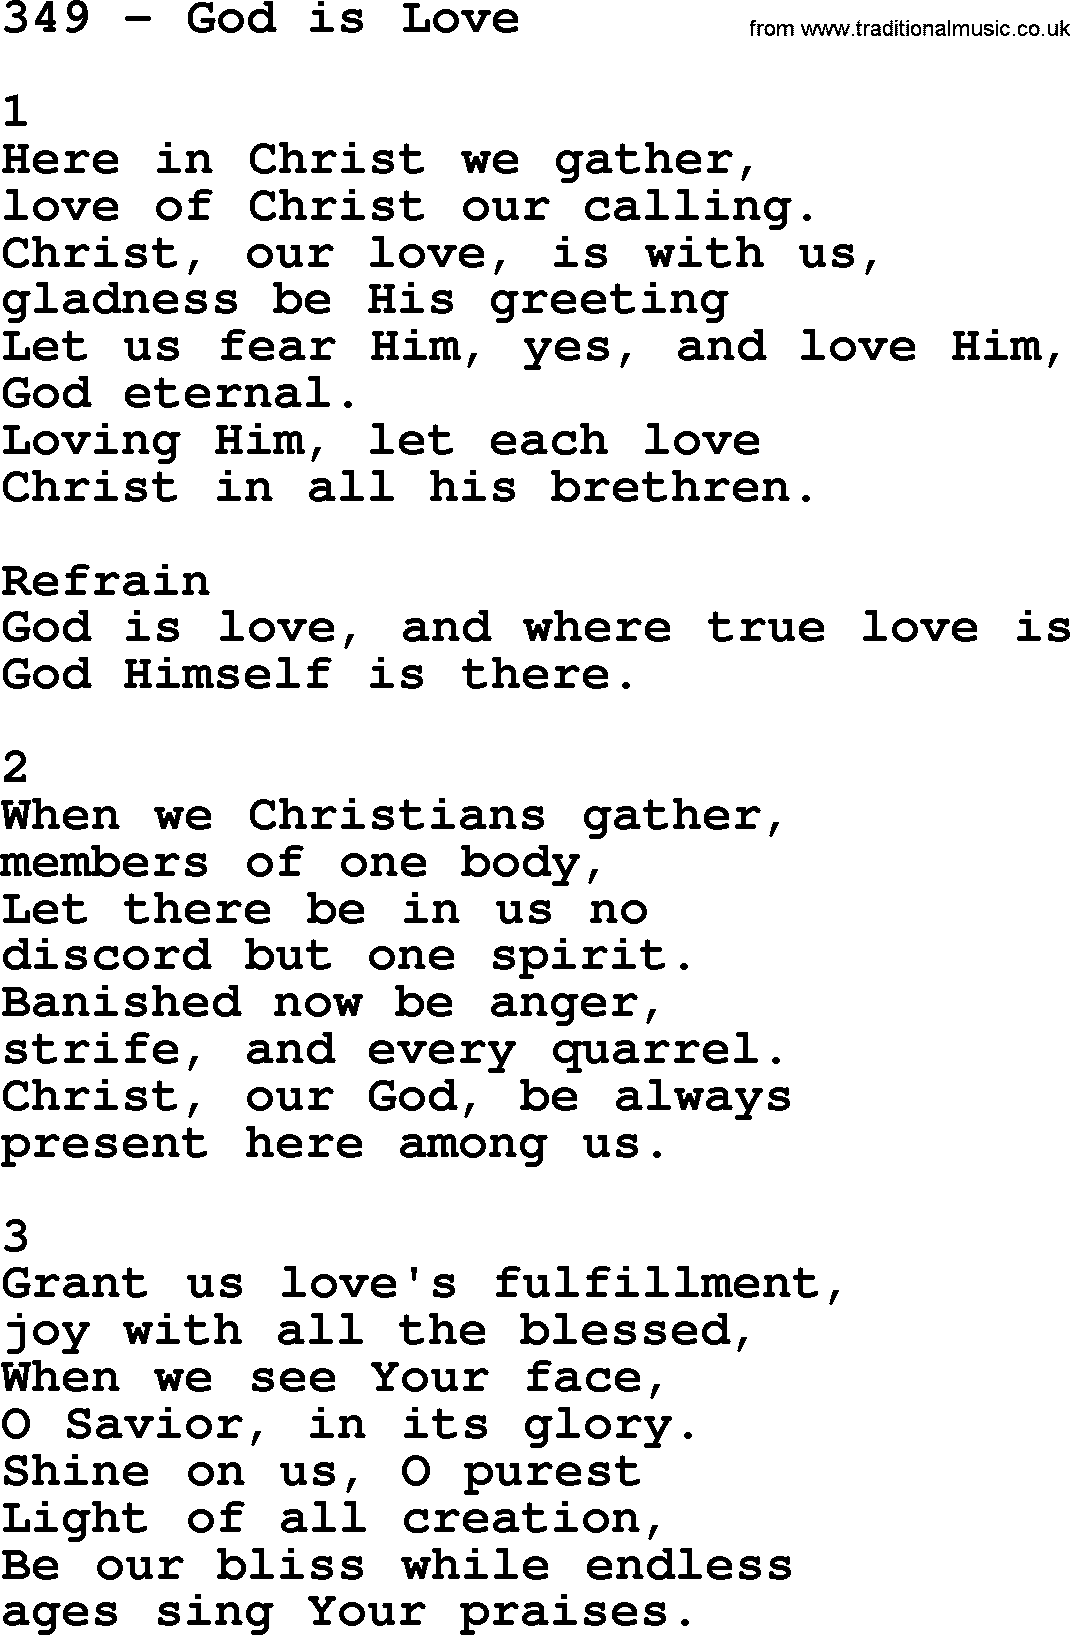 Adventist Hymnal, Song: 349-God Is Love, with Lyrics, PPT, Midi, MP3